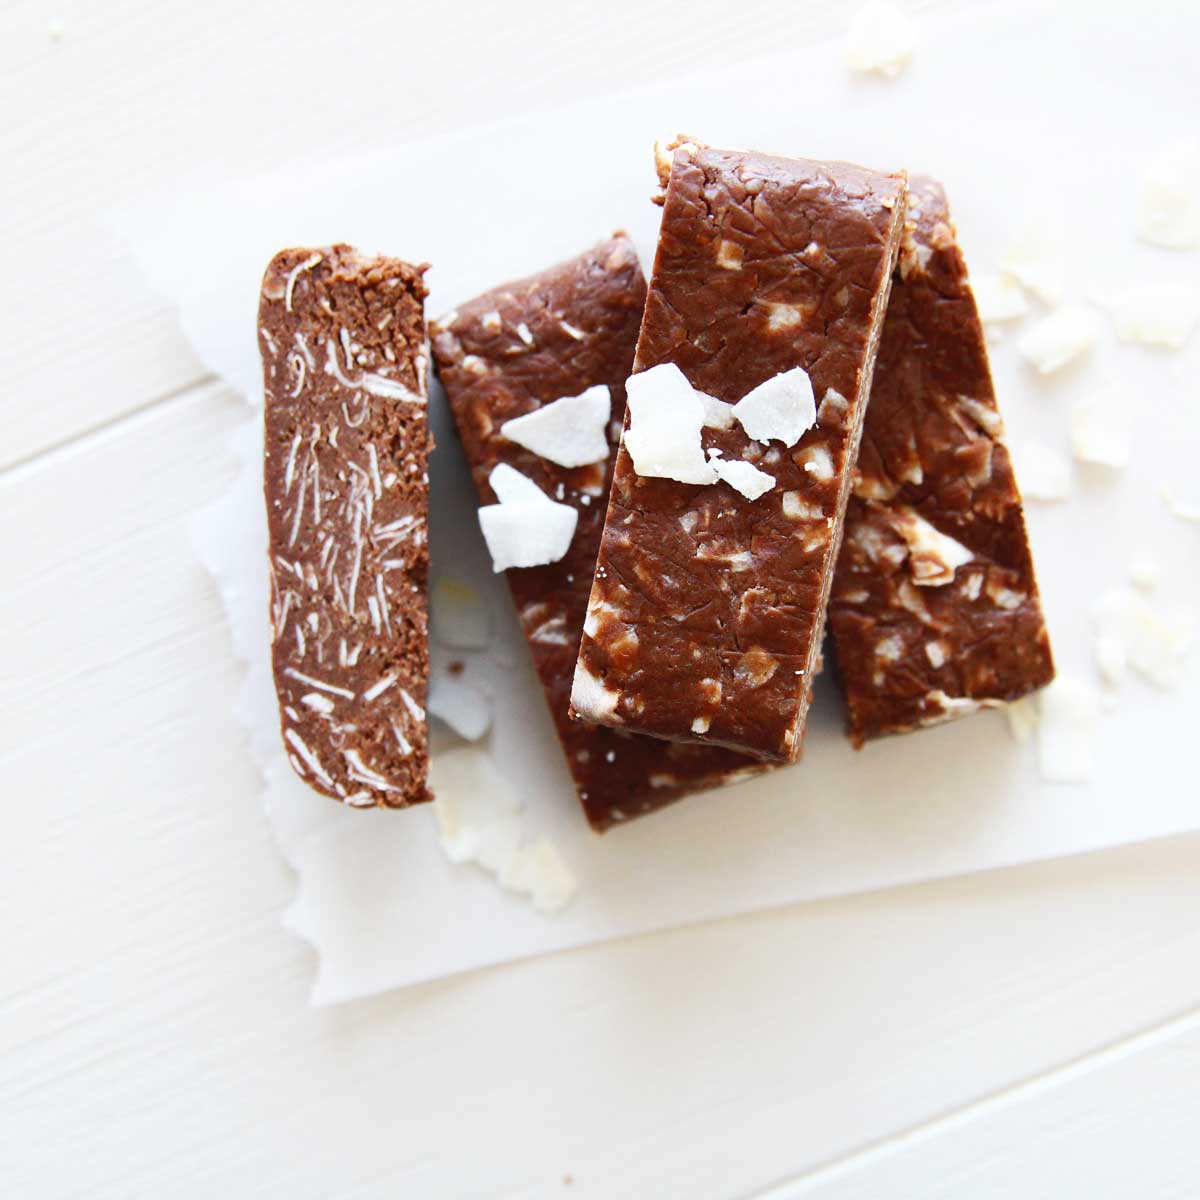 Vegan Coconut Chocolate "Almond Joy" Protein Bars Recipe - Caramel Apple Dip